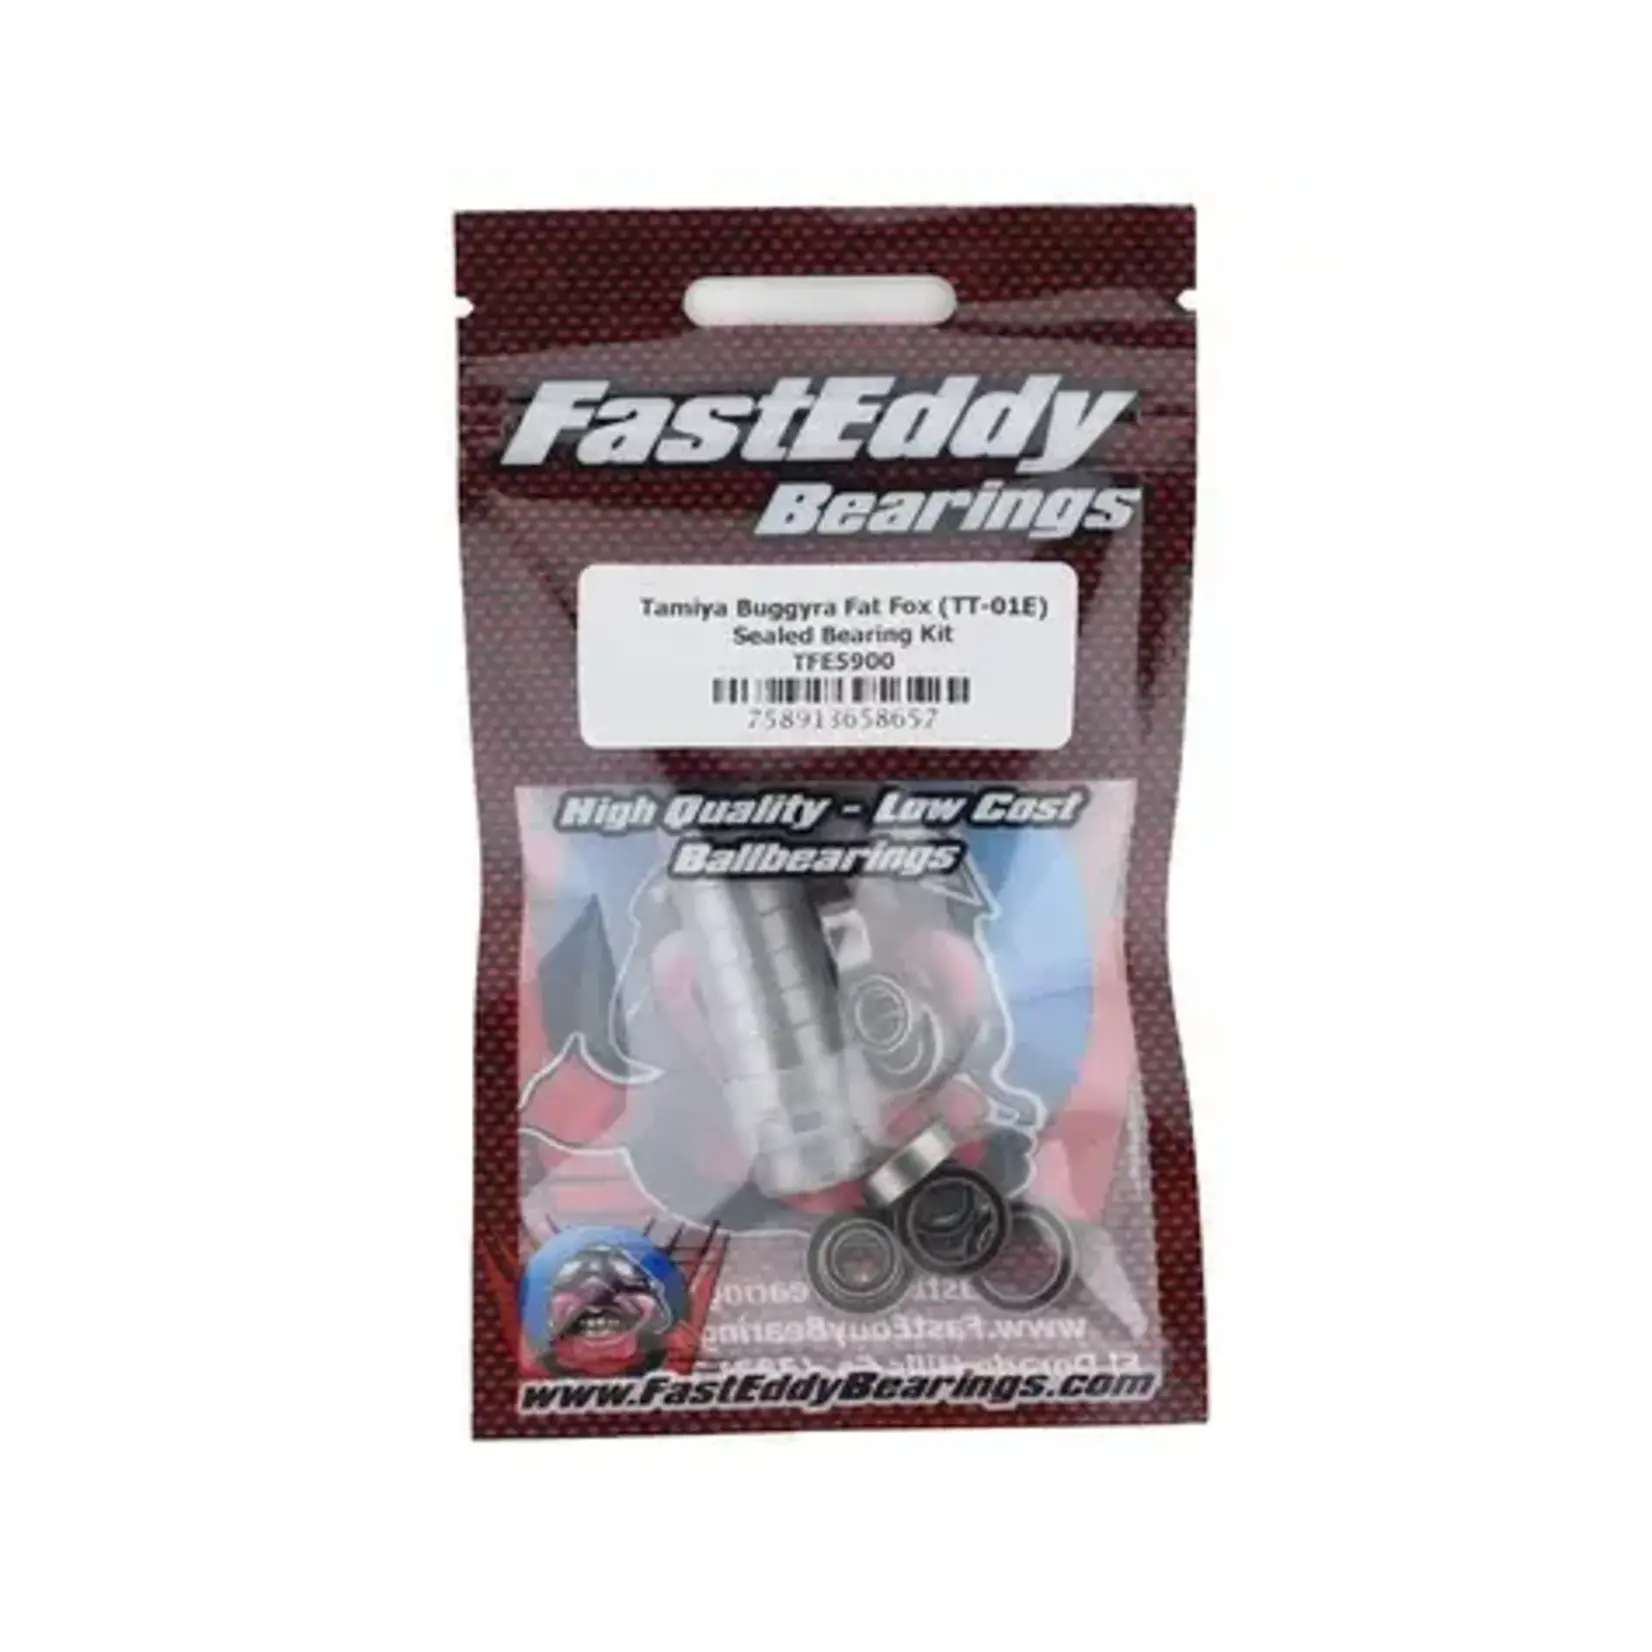 Fast Eddy Tamiya Buggyra Fat Fox Sealed Bearing Kit (TT-01E)